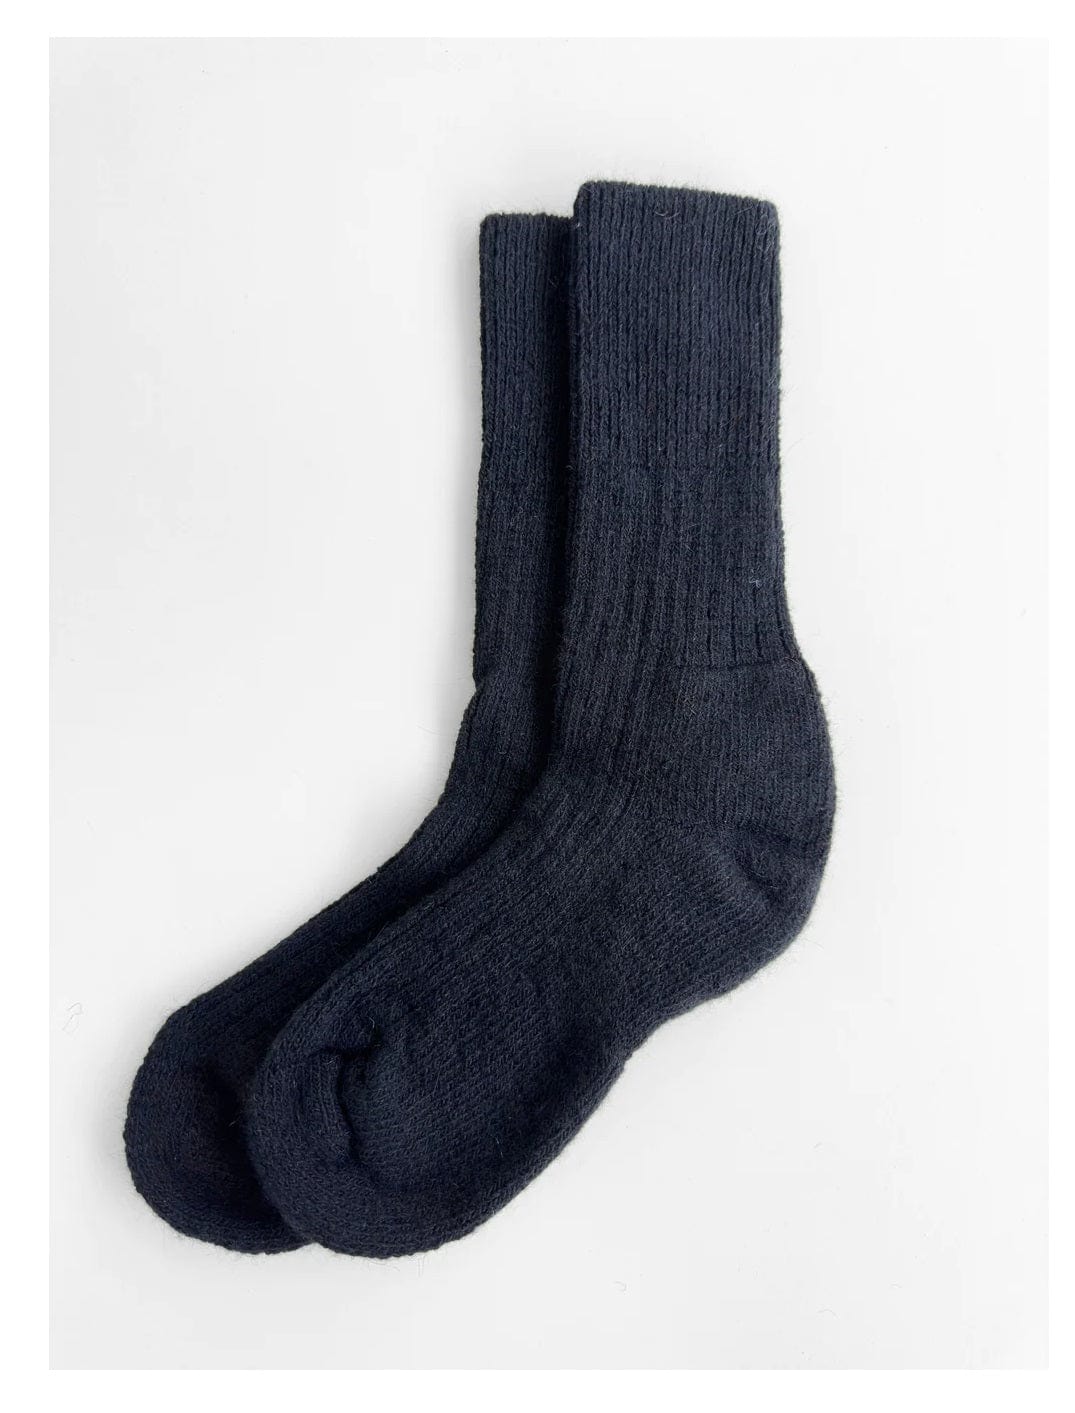 Angora Wool Thermal Socks - Black - The Icelandic Store